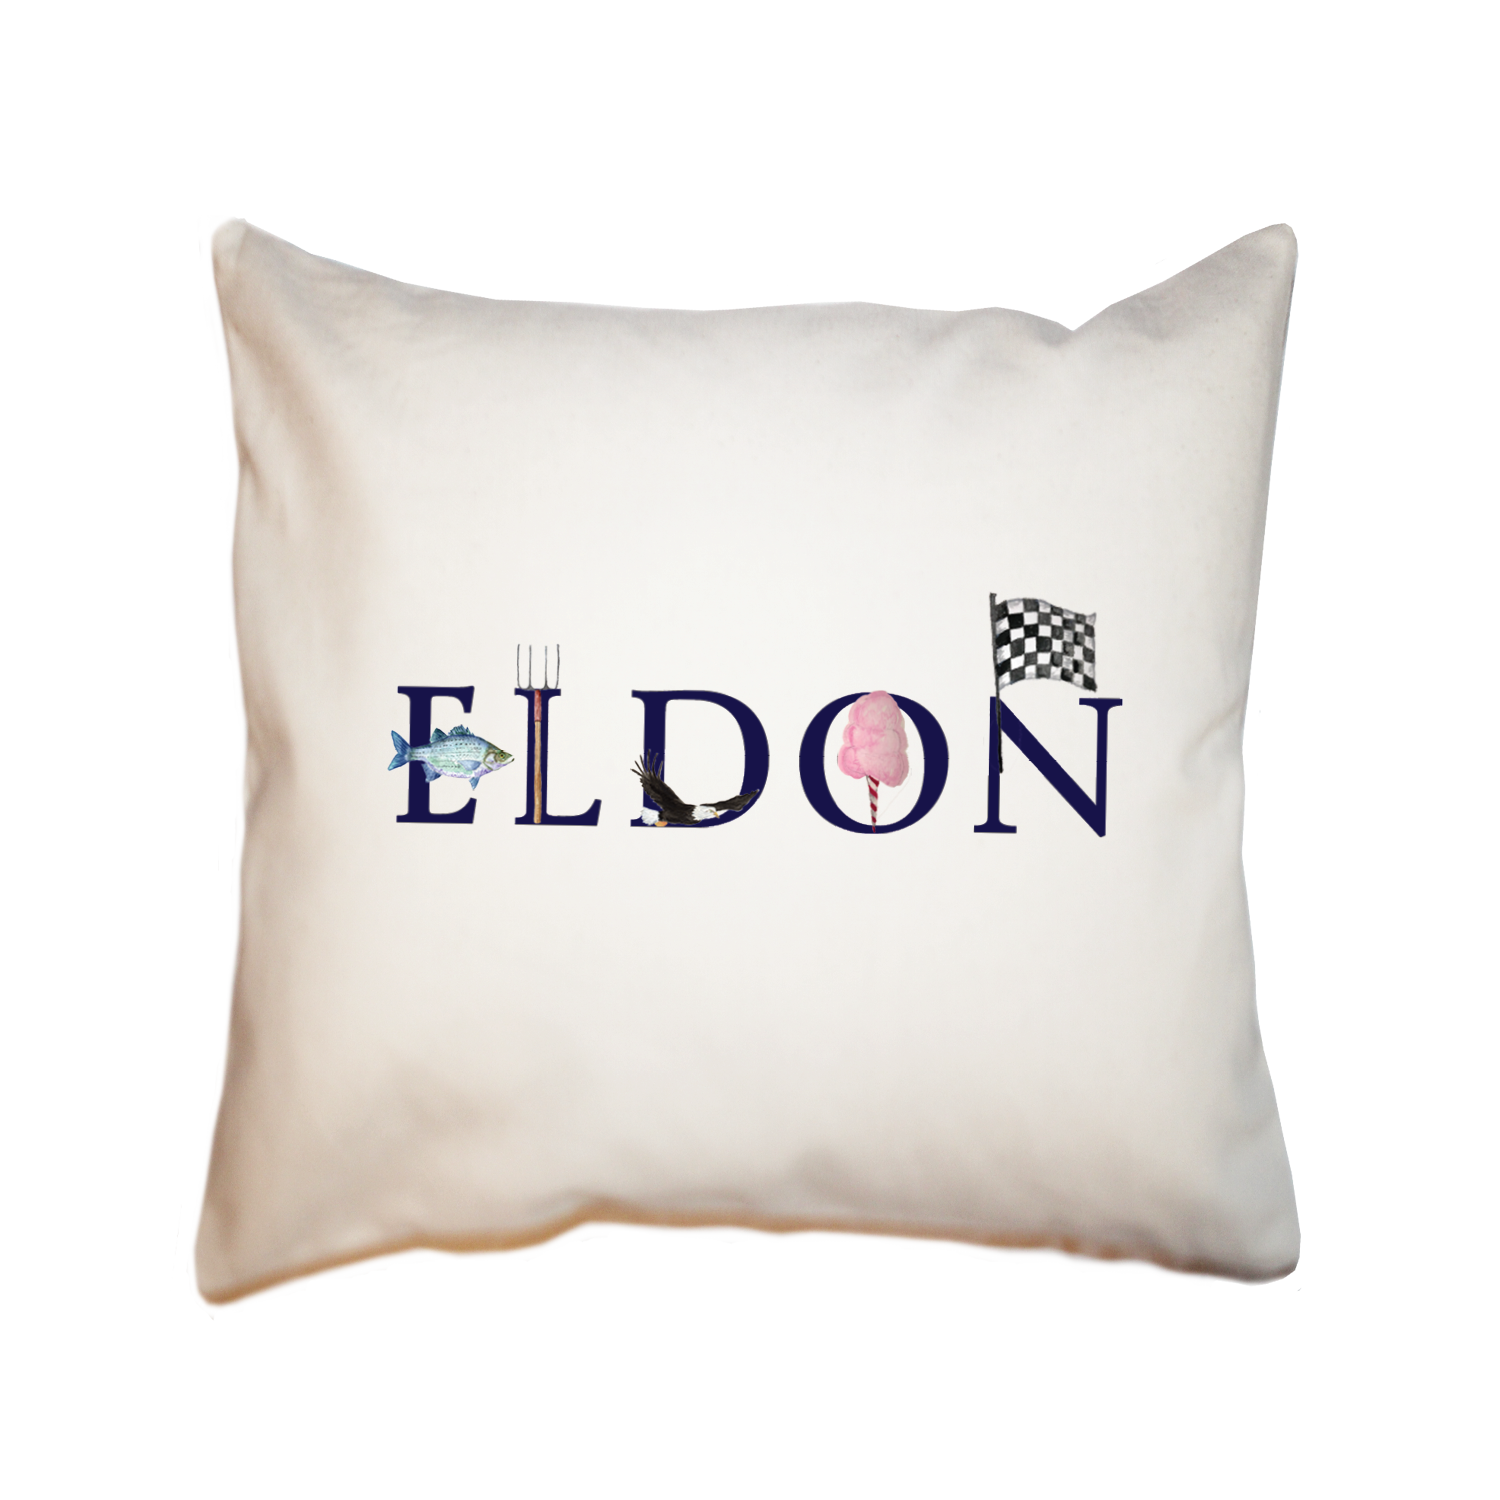 eldon square pillow